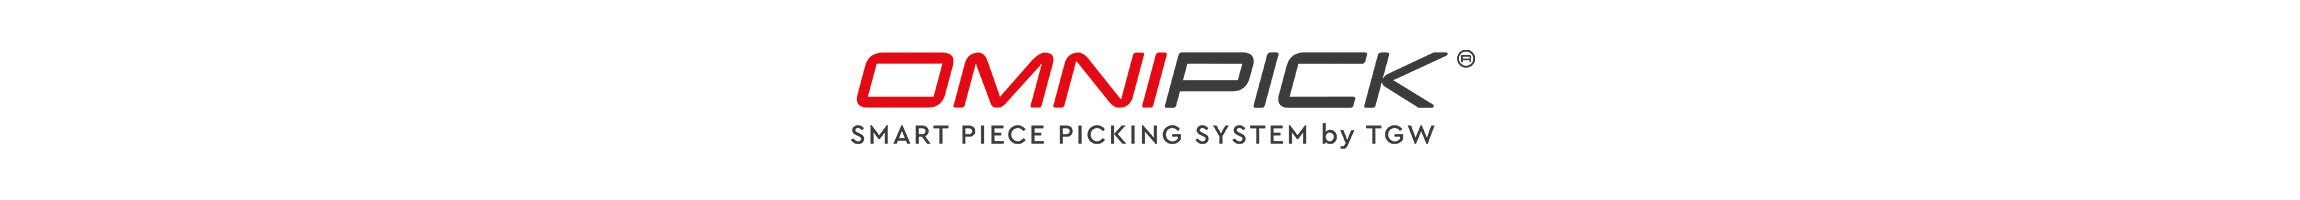 OmniPick® - Smart Piece Picking System by TGW